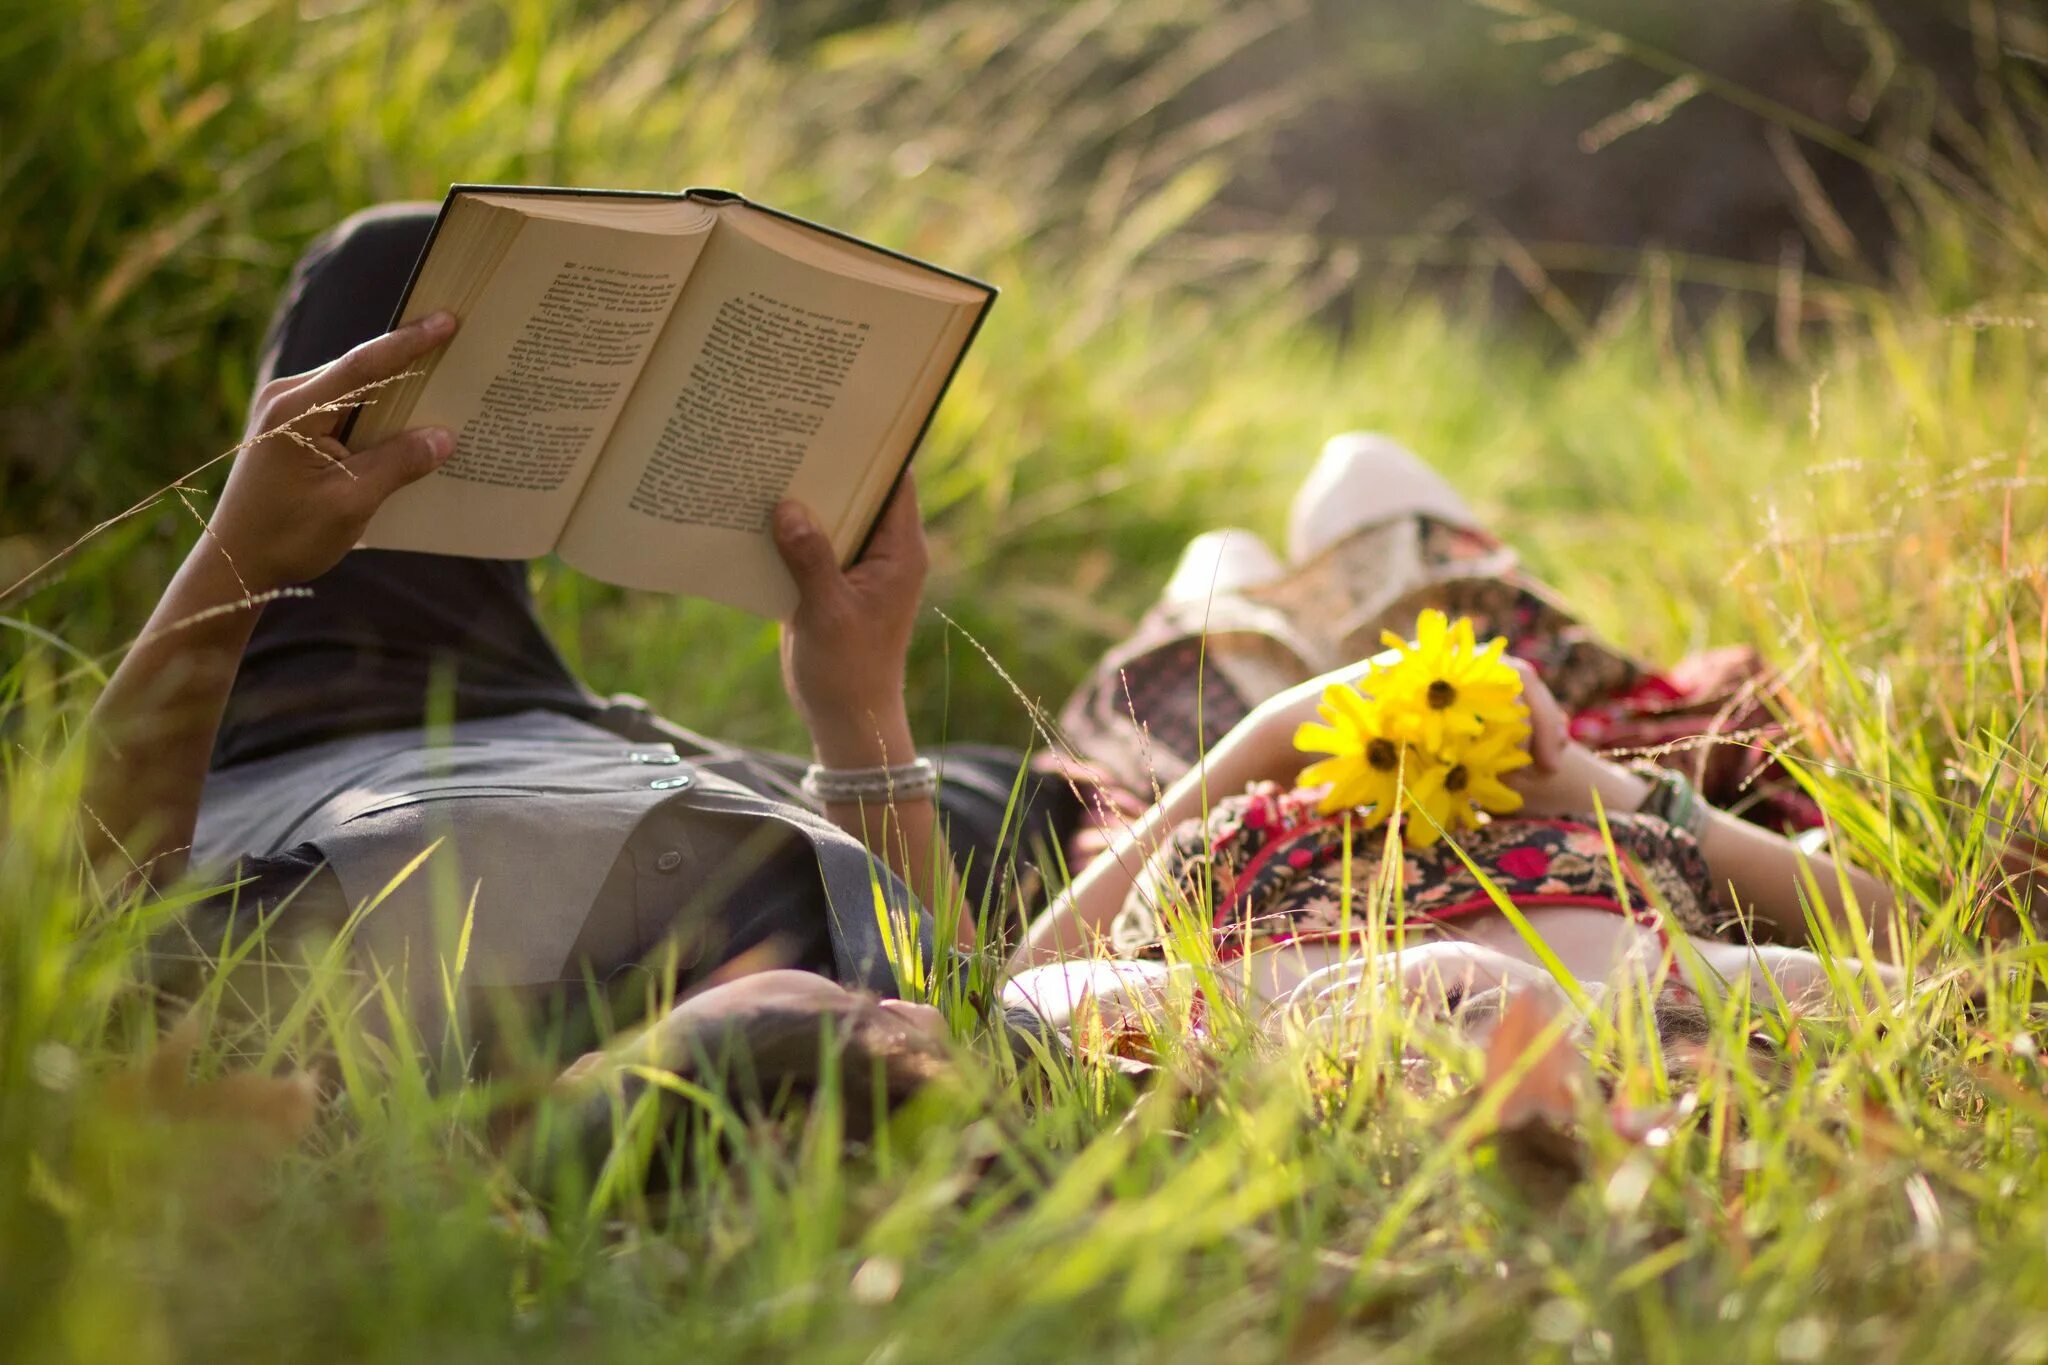 Книга в жизни семьи. Чтение на природе. Фотосессия с книгой на природе. Человек и природа. Девочка с книжкой на траве.